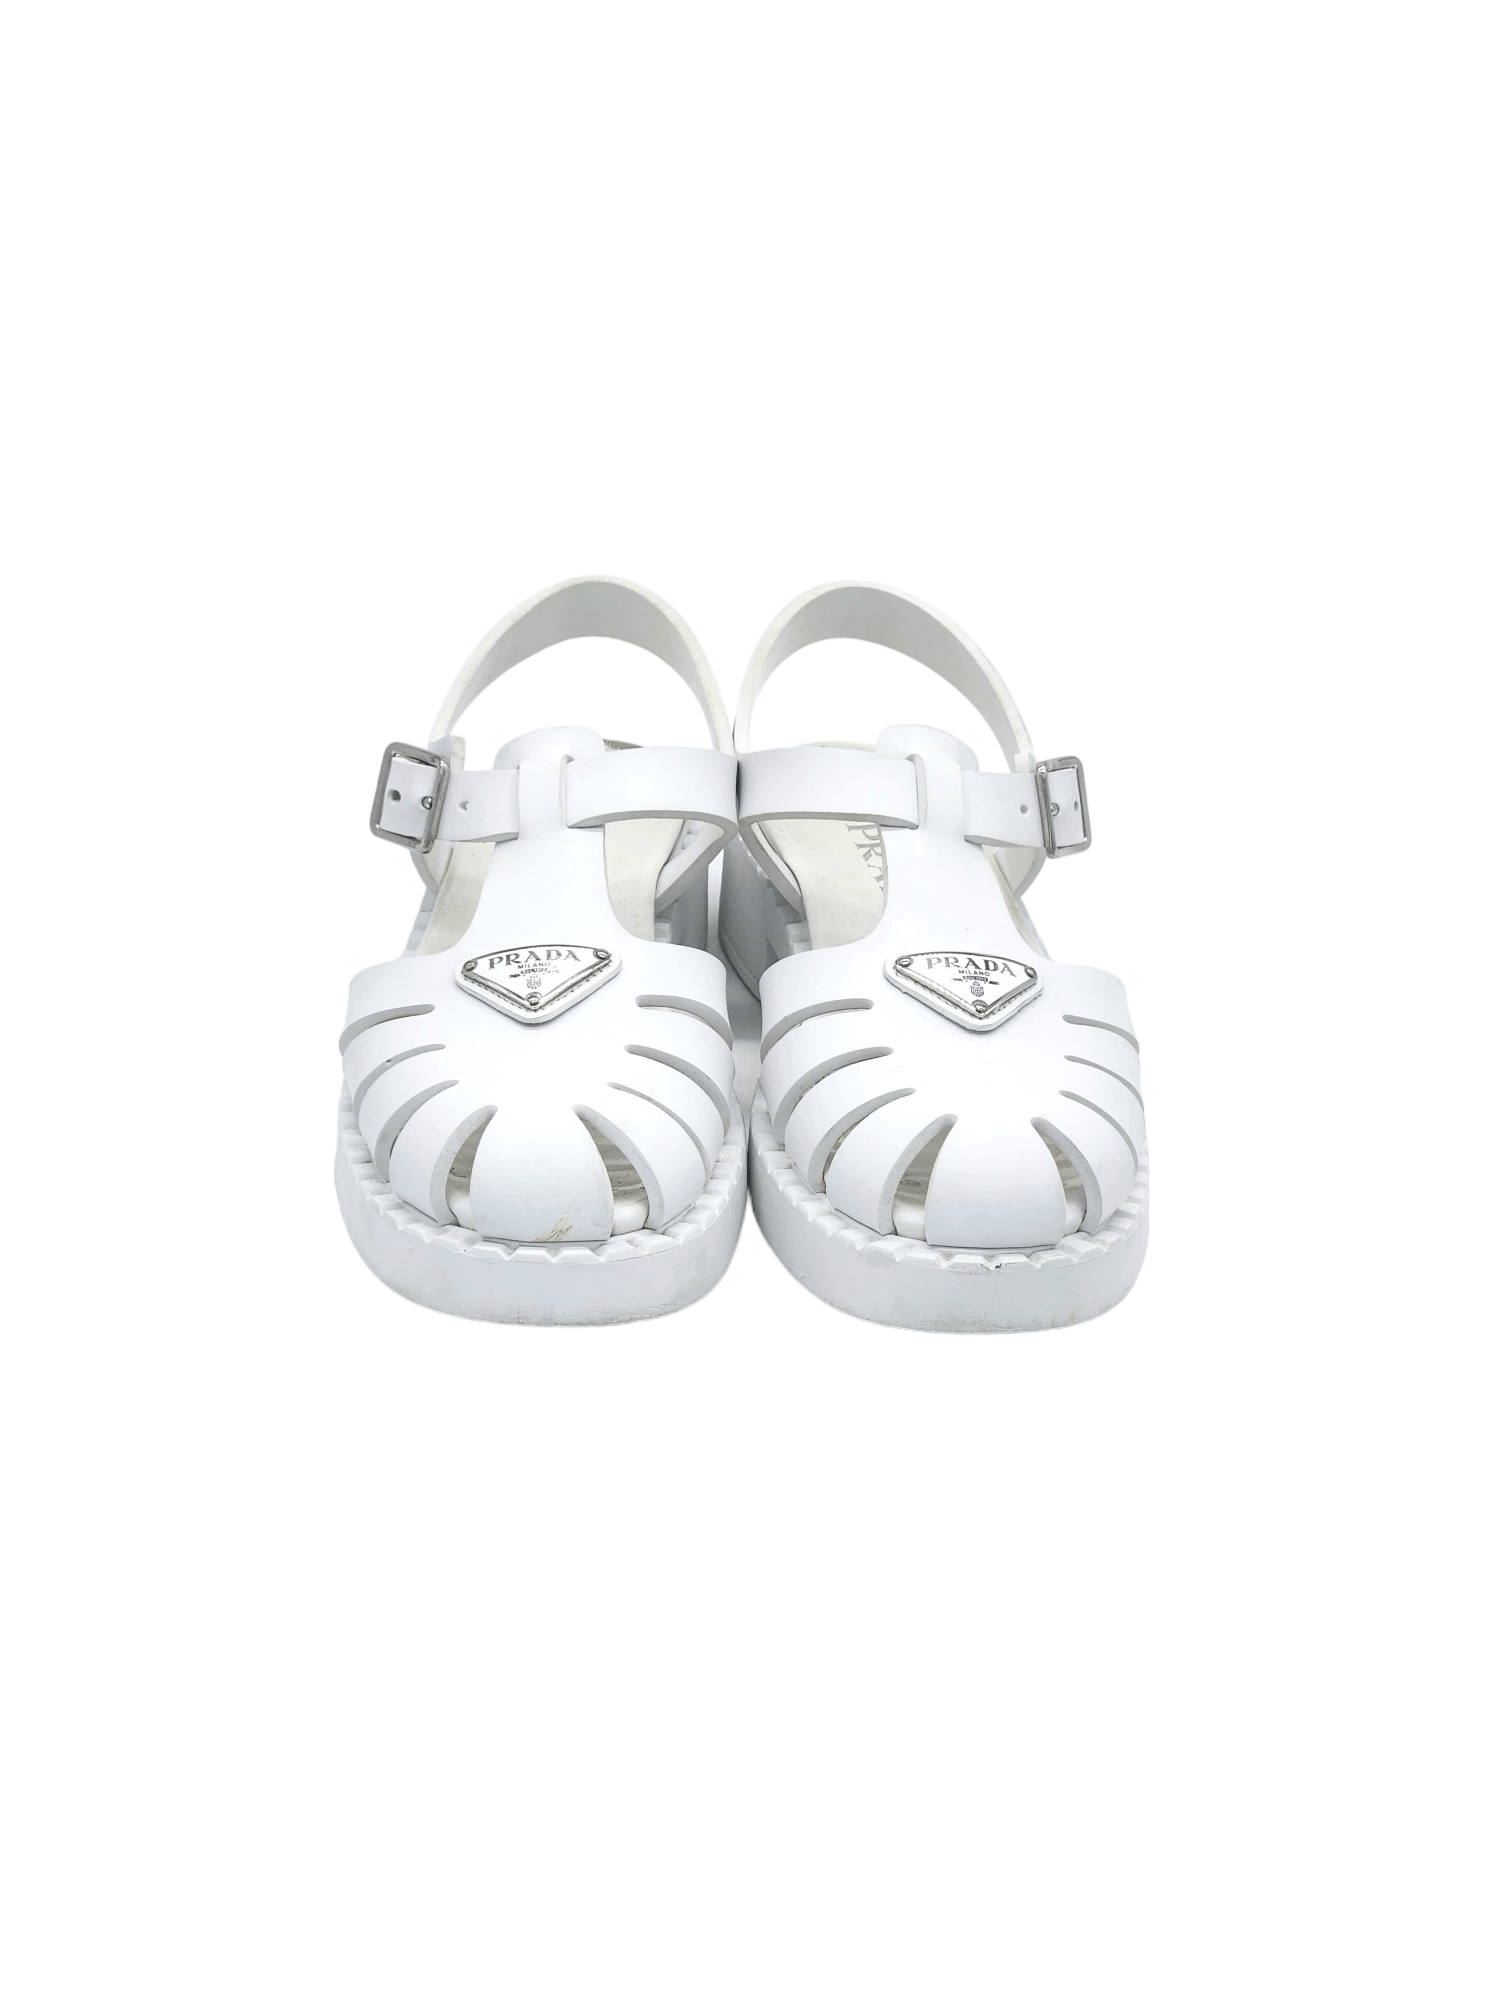 Prada Sporty foam rubber sandals - White